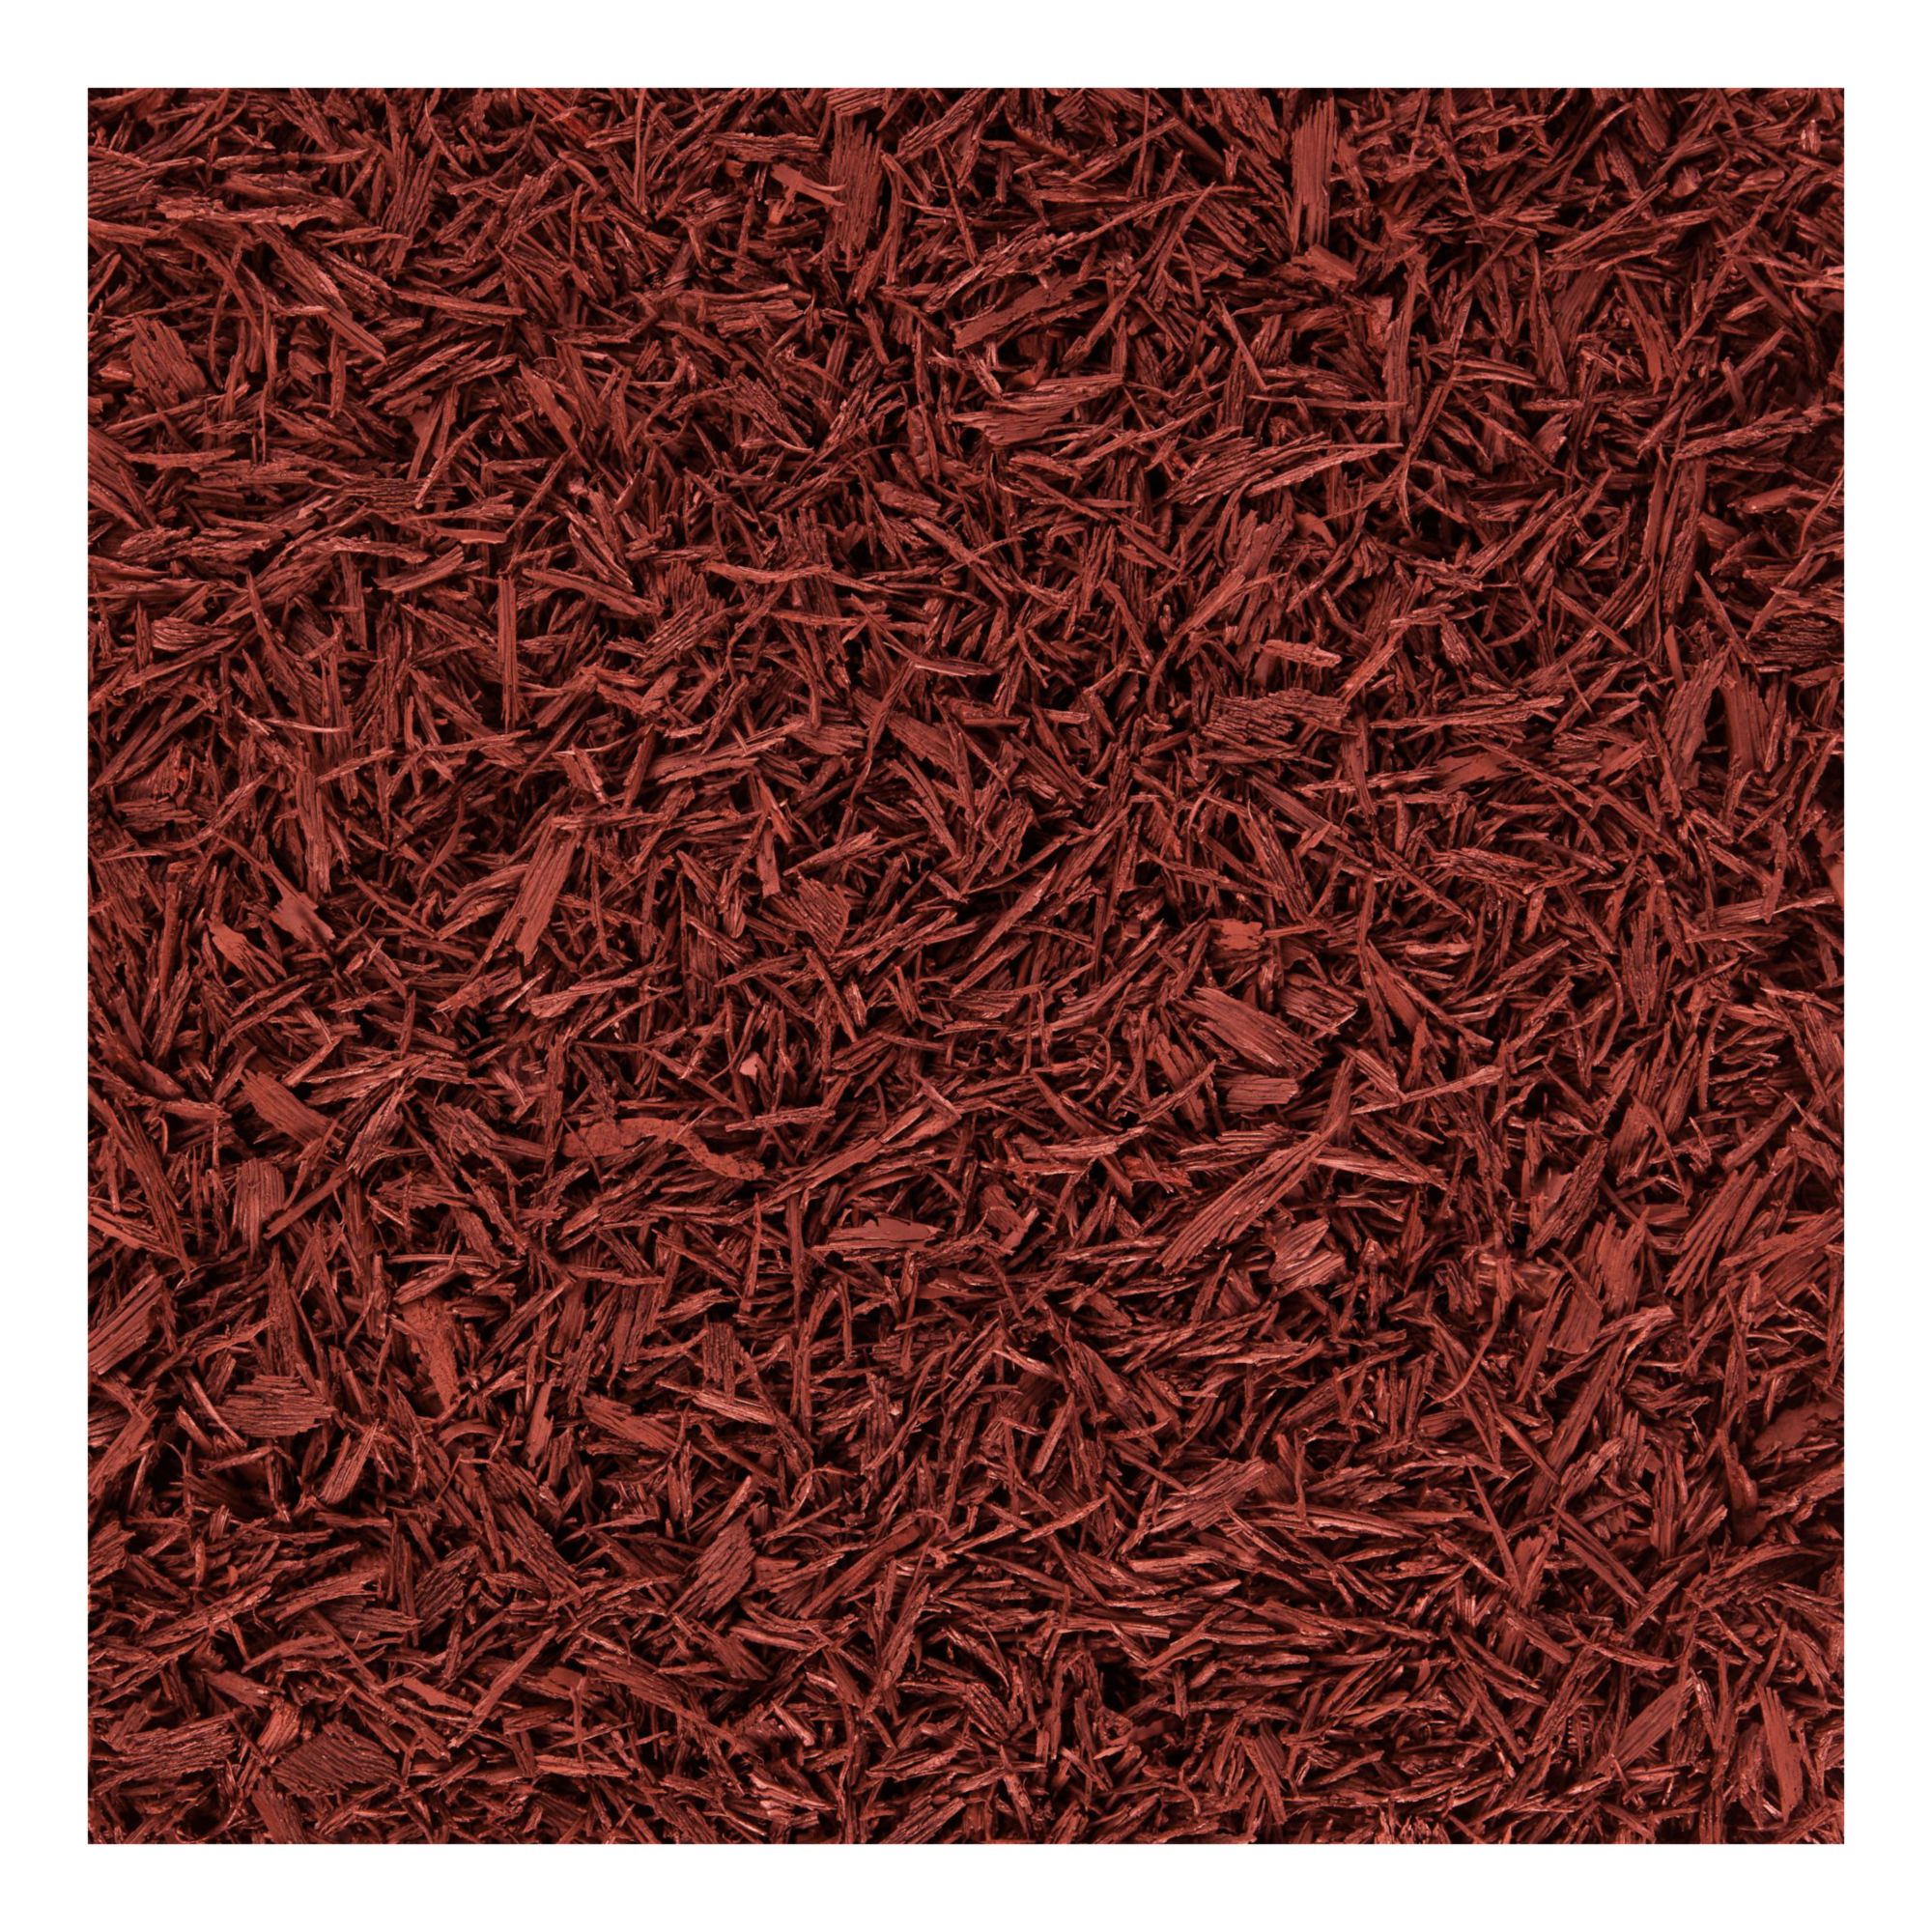 GroundSmart 75 cu.-ft. Red Premium Shredded Rubber Mulch